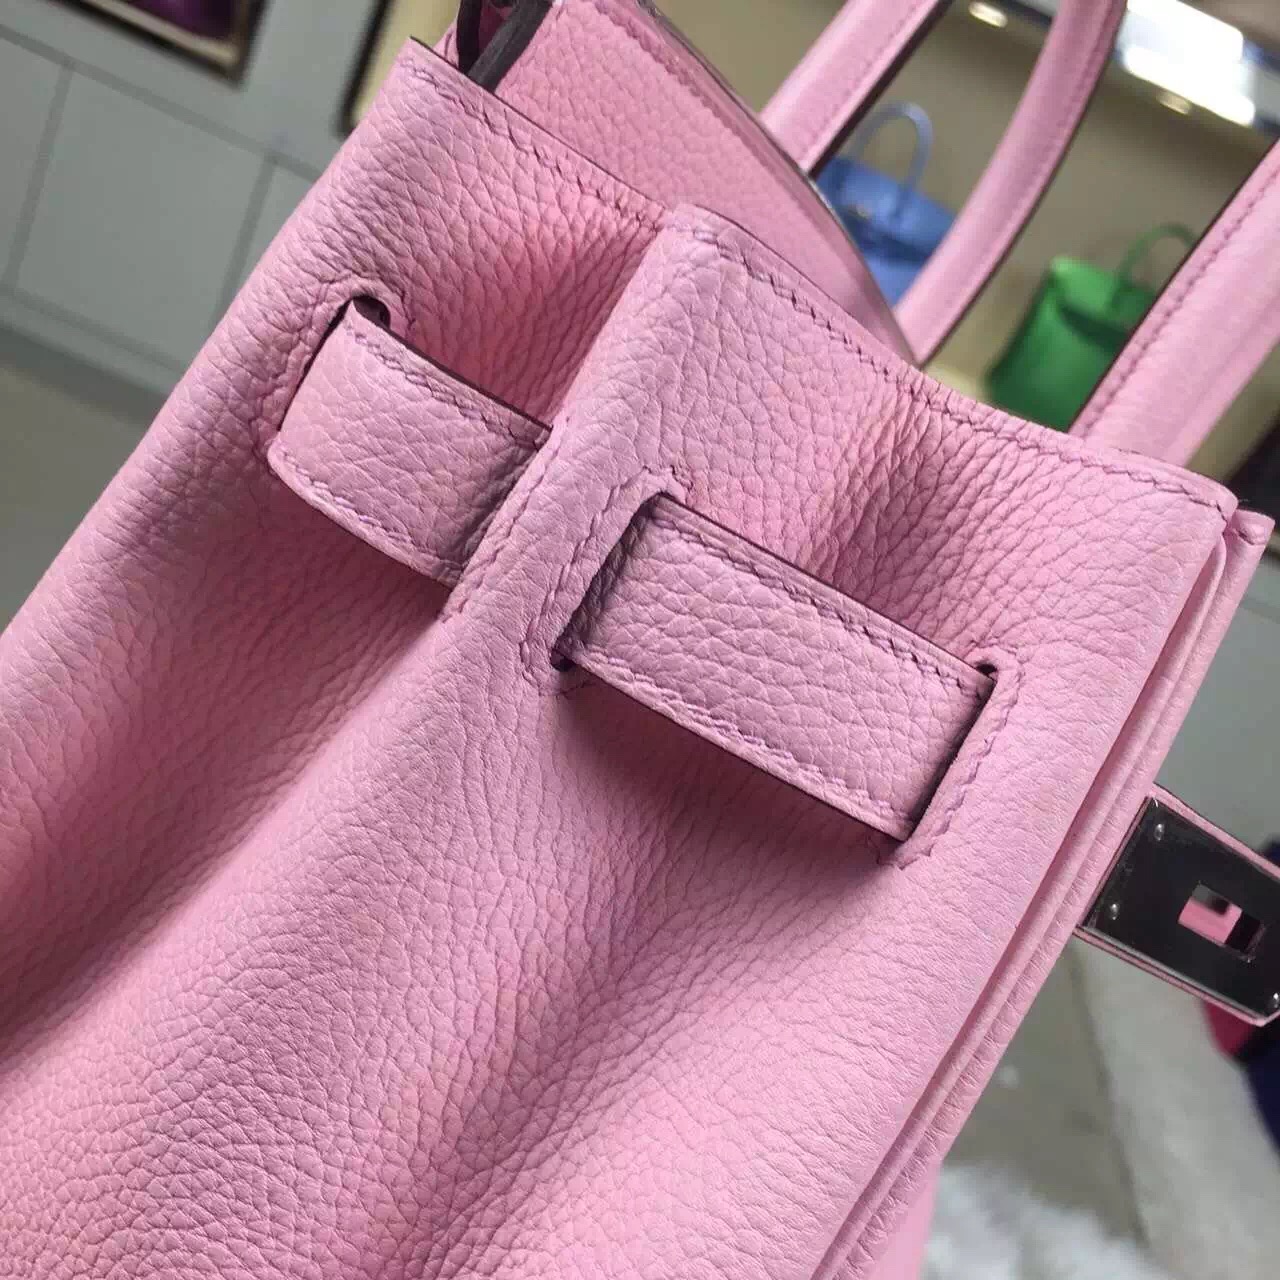 New Pretty Hermes Vip Customized 3Q Rose Sakura Togo Leather Birkin Handbag 30CM